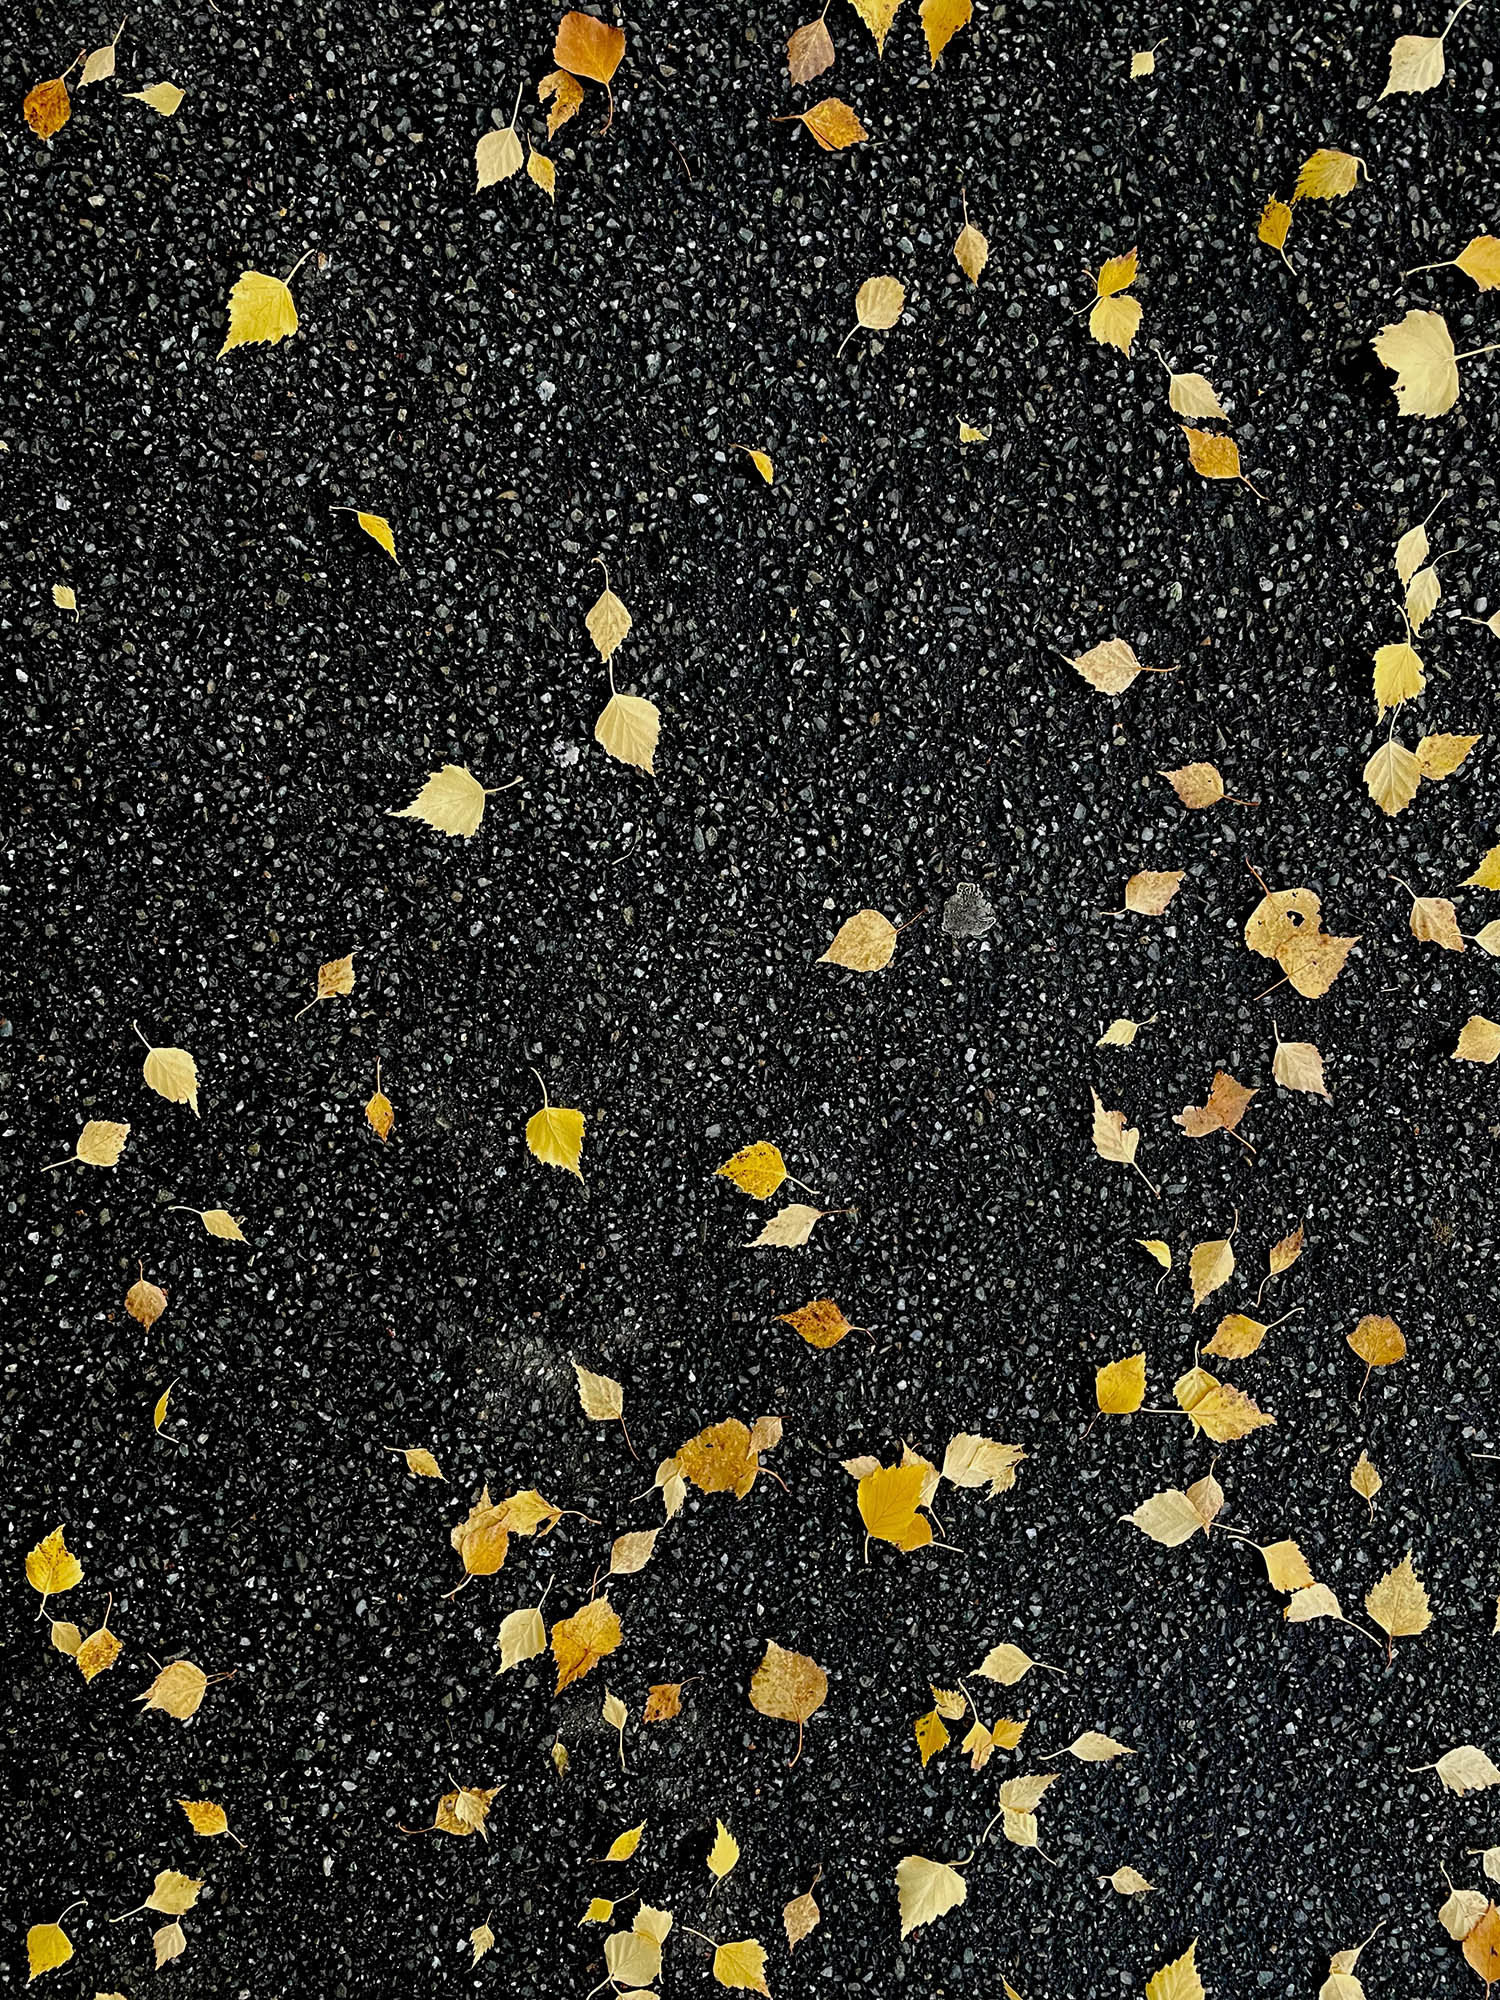 Golden leaves on a black footpath